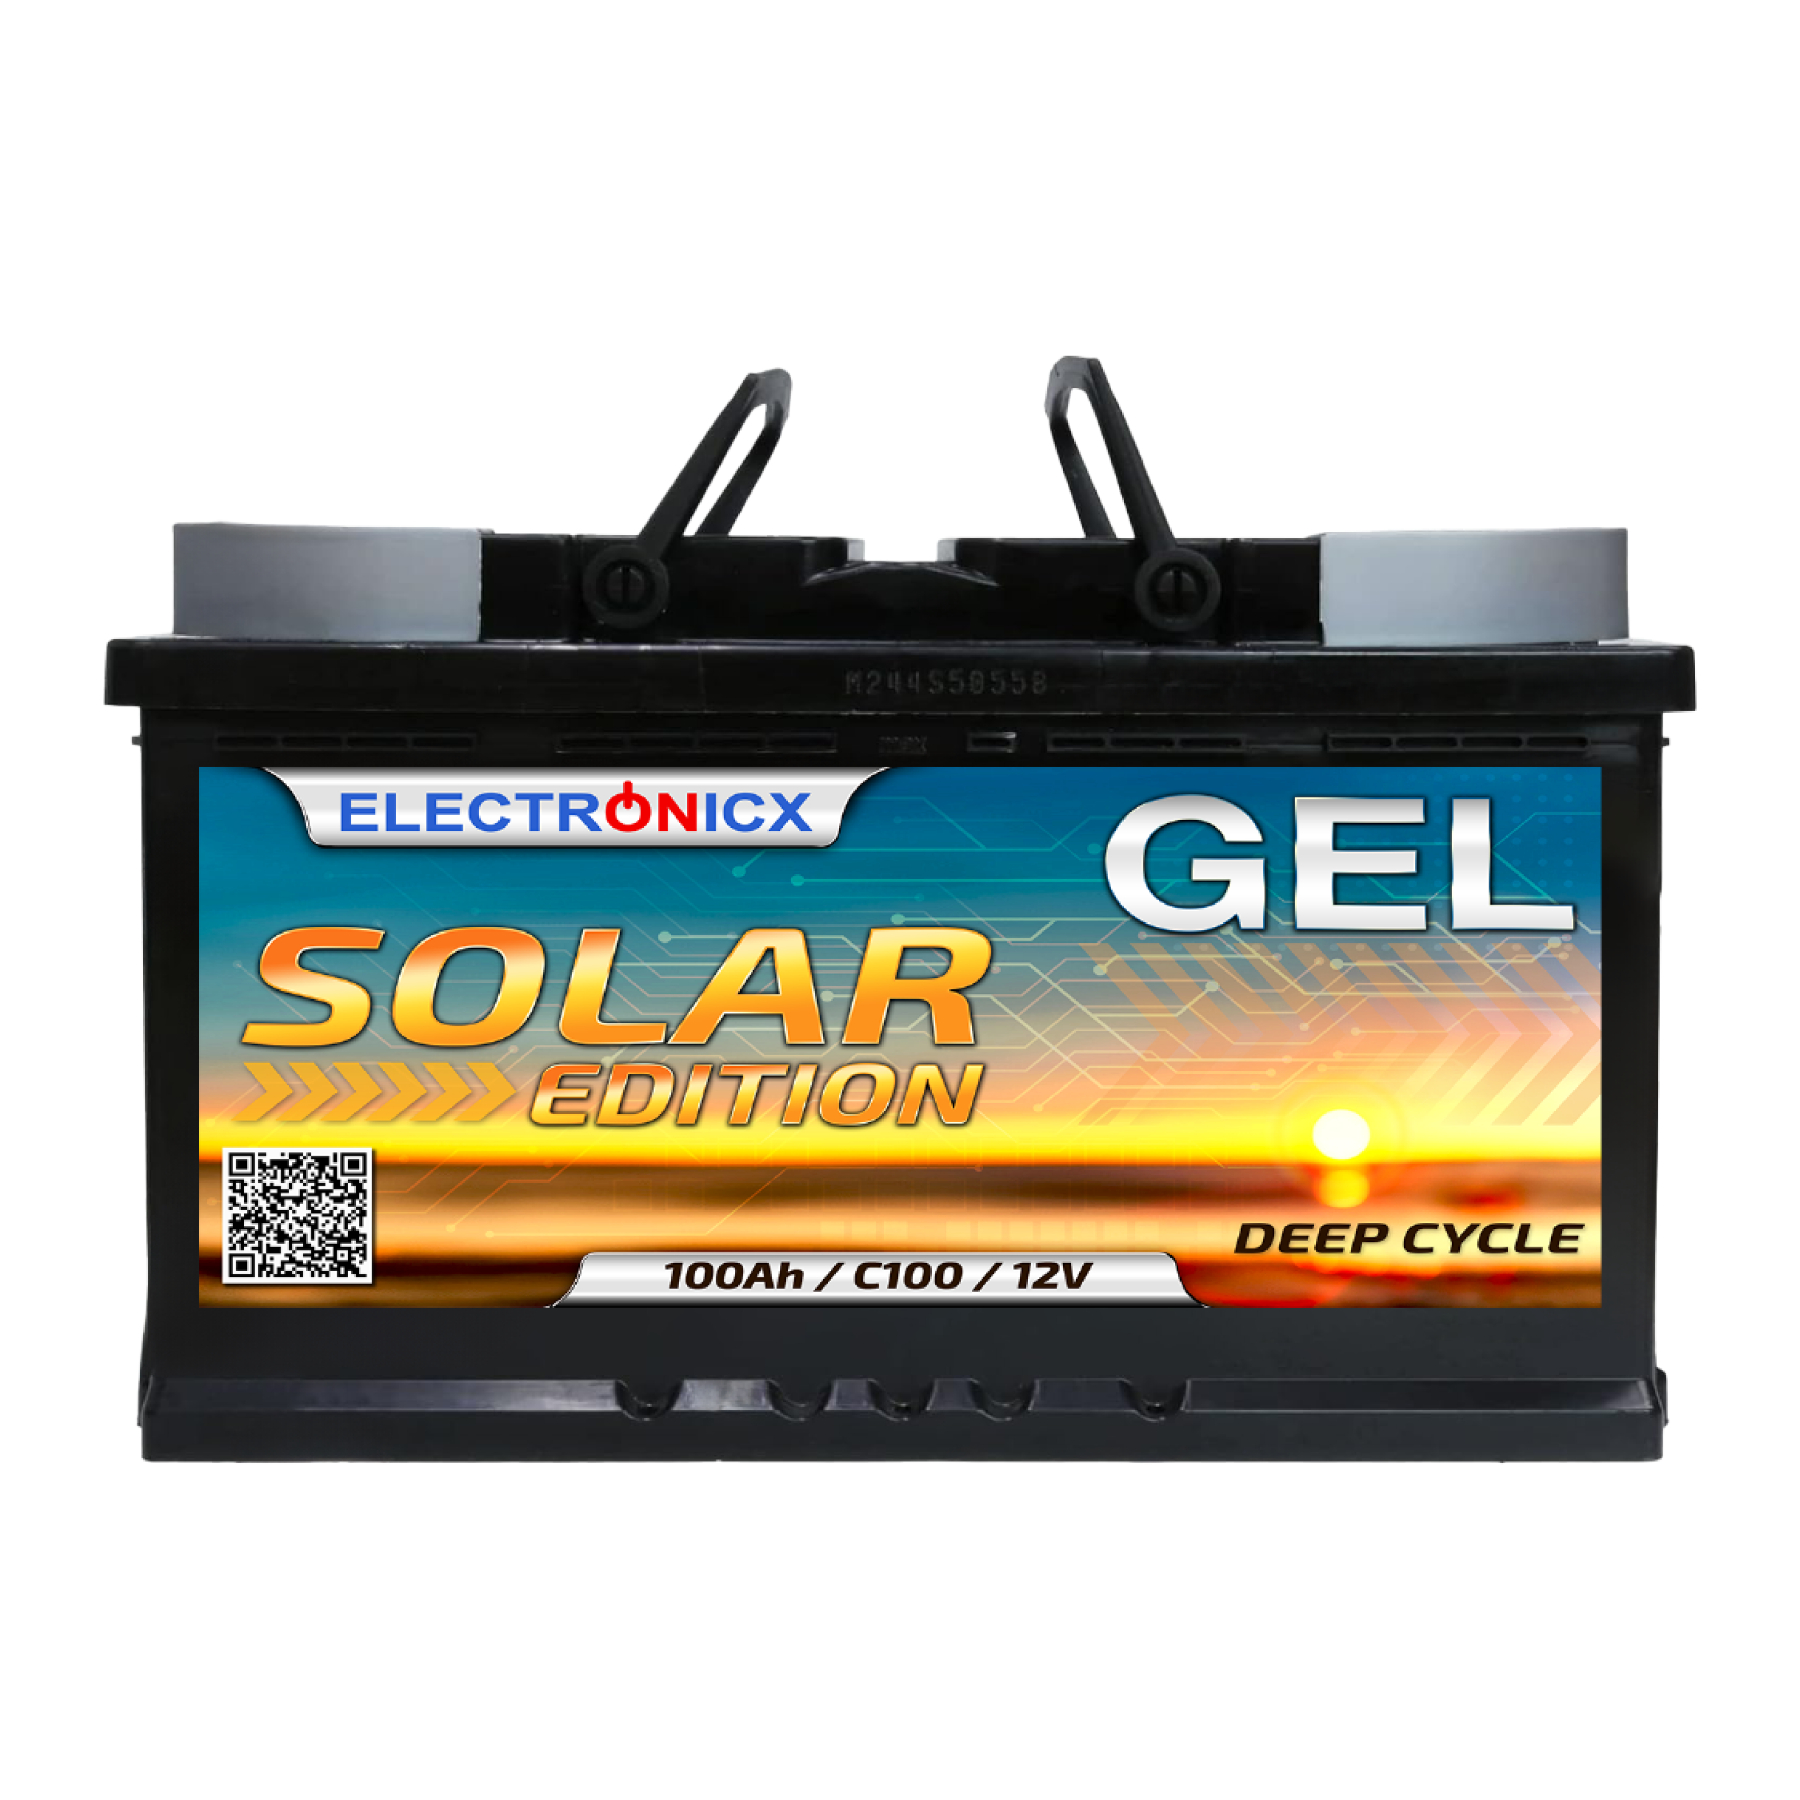 Electronicx Solar Edition GEL Batterie 100 AH 12V, 144,90 €